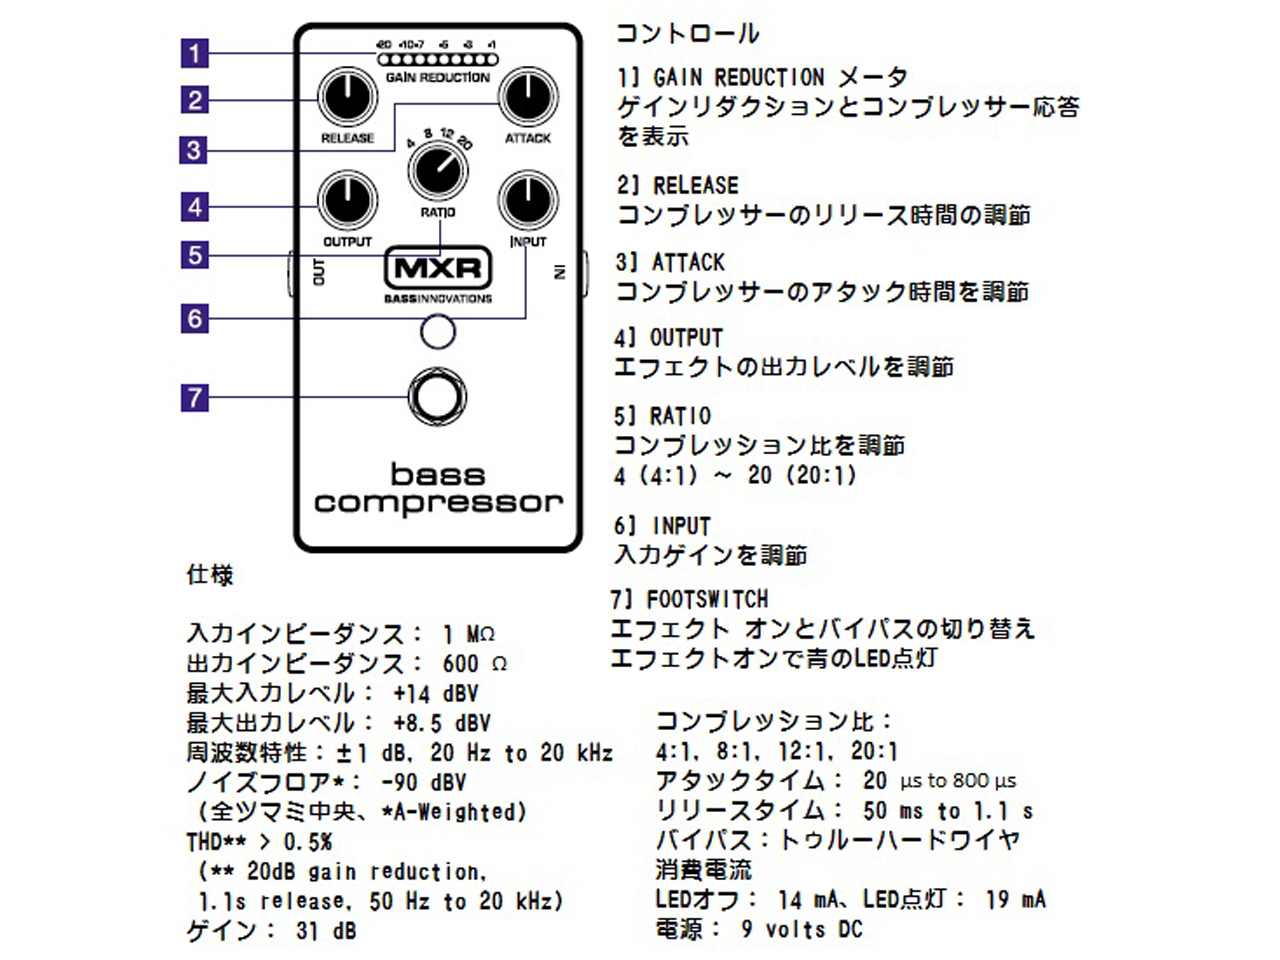 MXR(エムエックスアール) M87 Bass Compressor (コンプレッサー) お茶の水駅前店(東京)